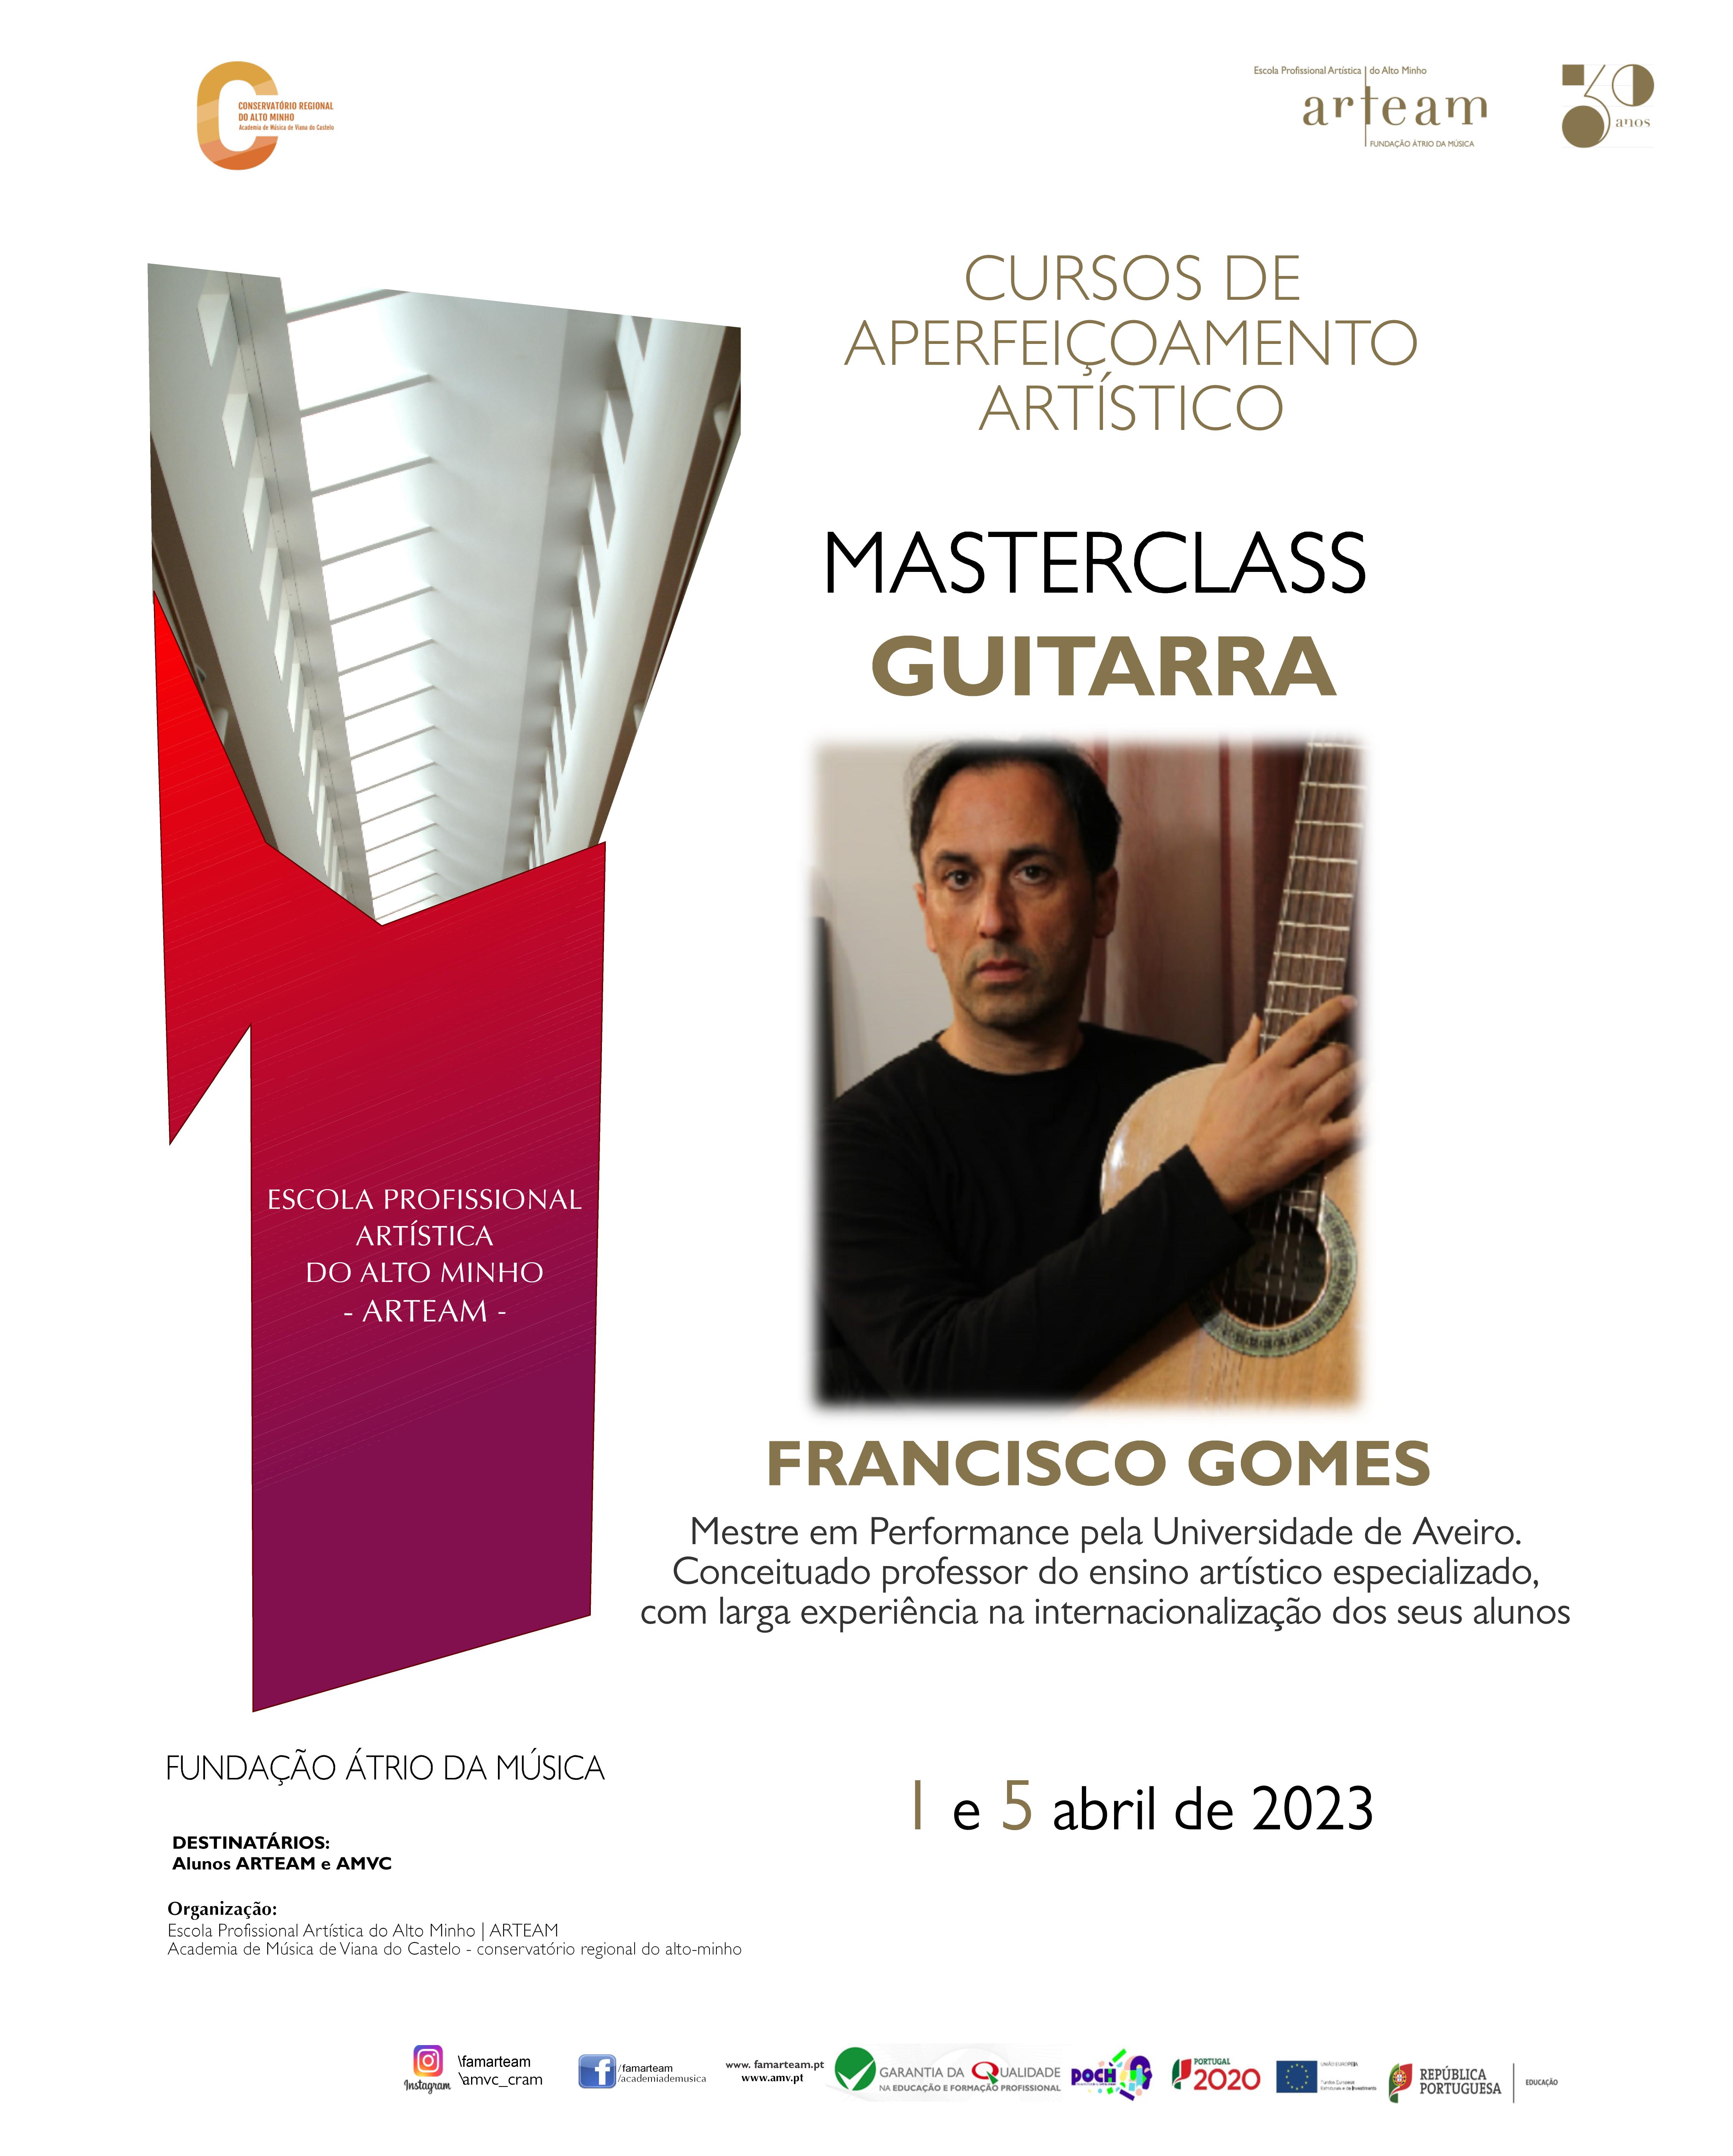 Masterclass de Guitarra por Francisco Gomes